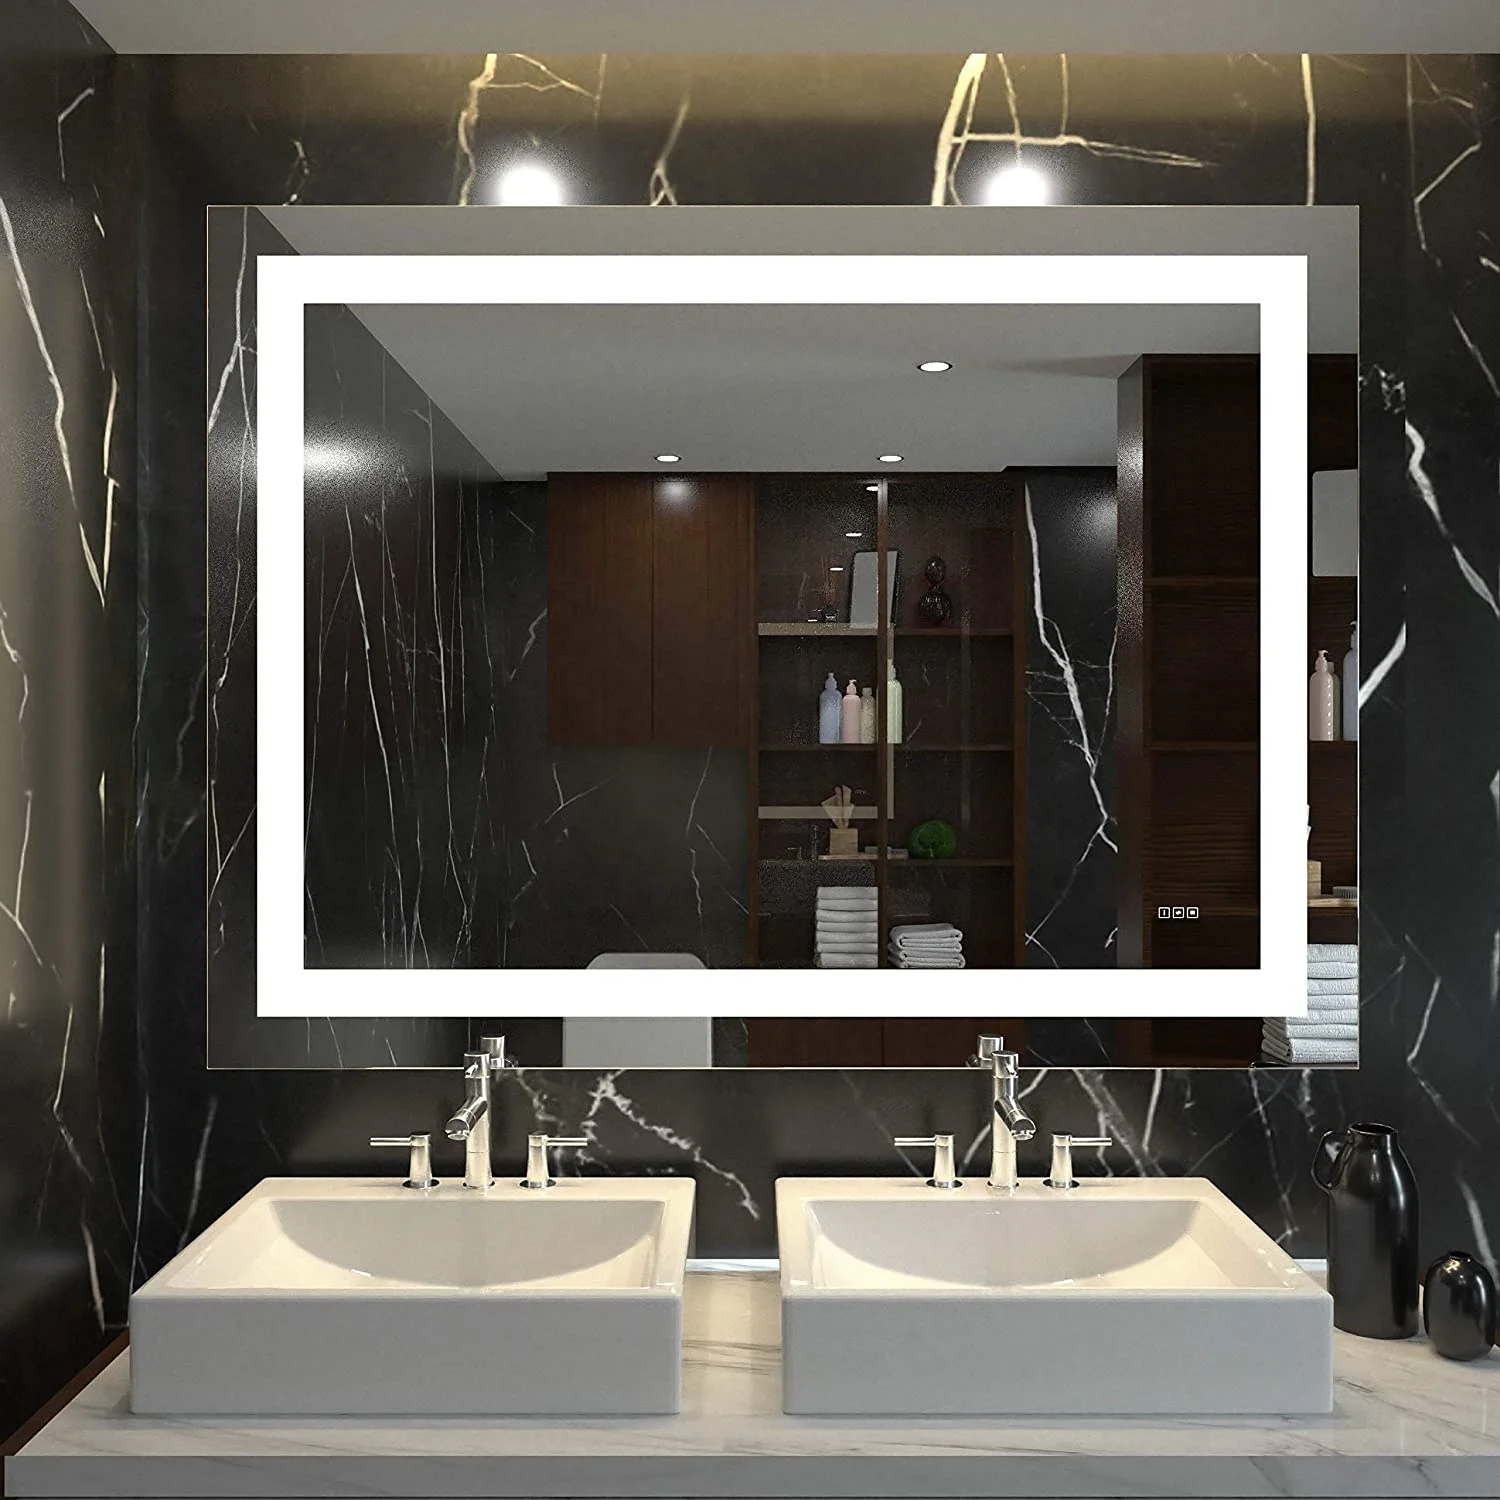 Self Development Customized Bathroom Hanging Light Wall Mirror Decorative Home